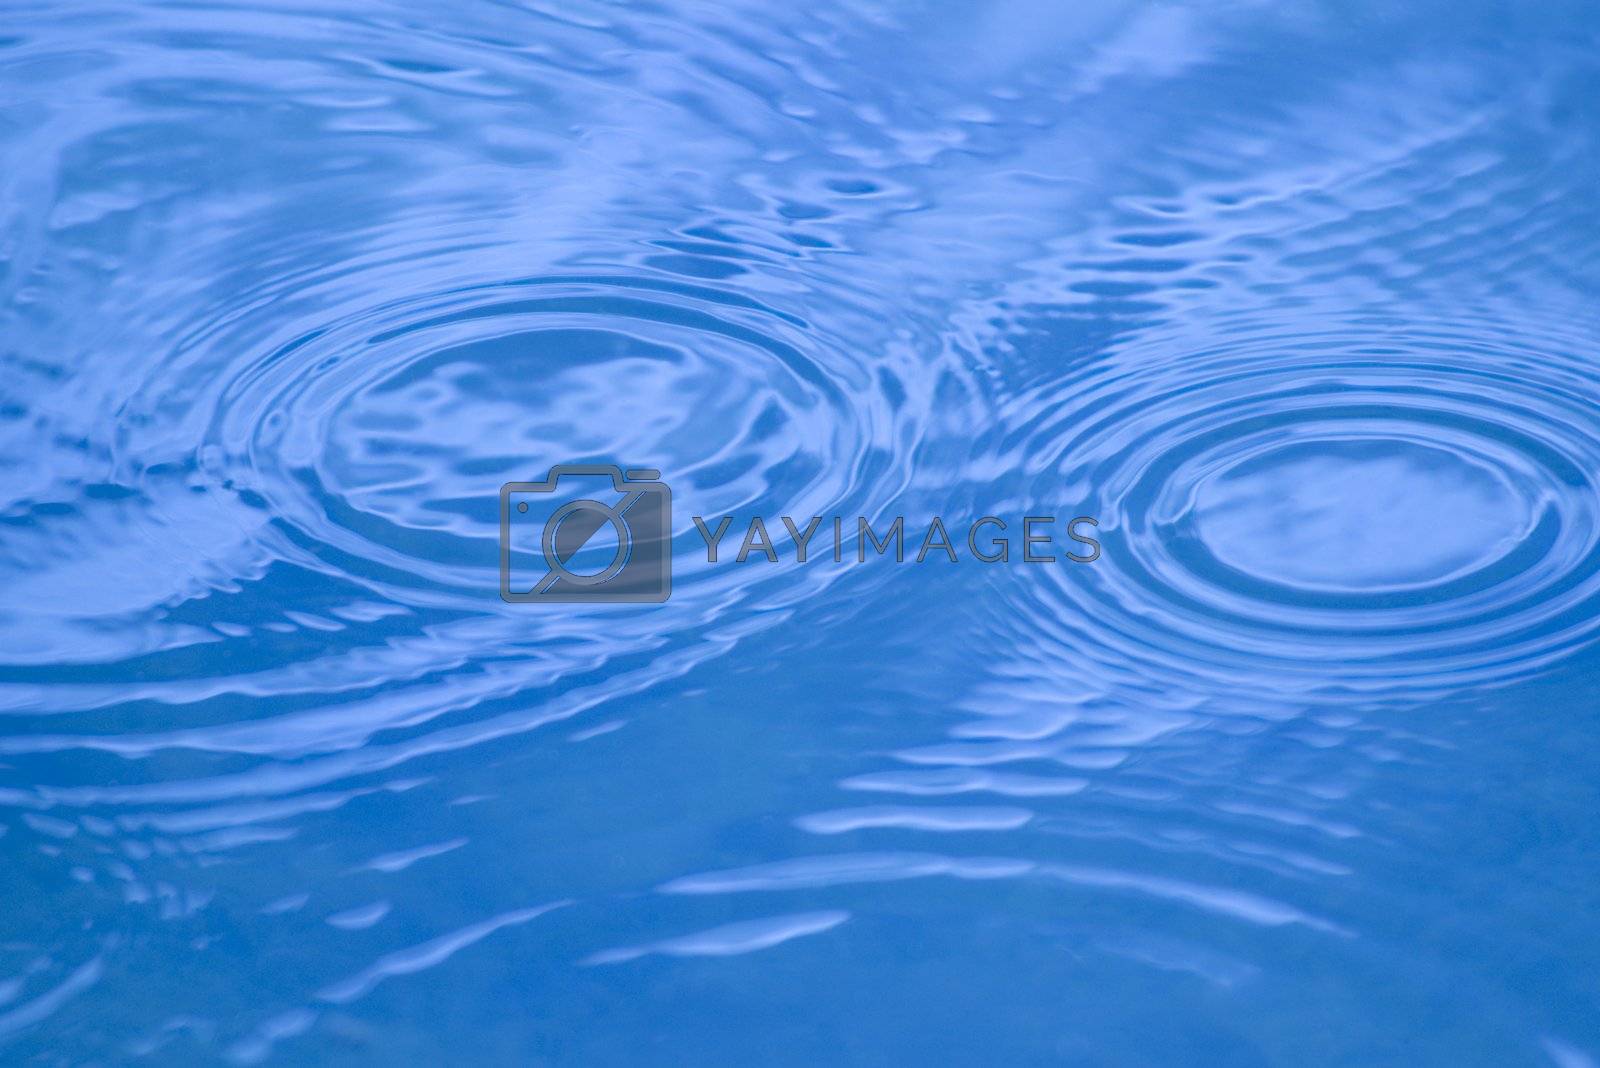 Royalty free image of Water Circles by monilu